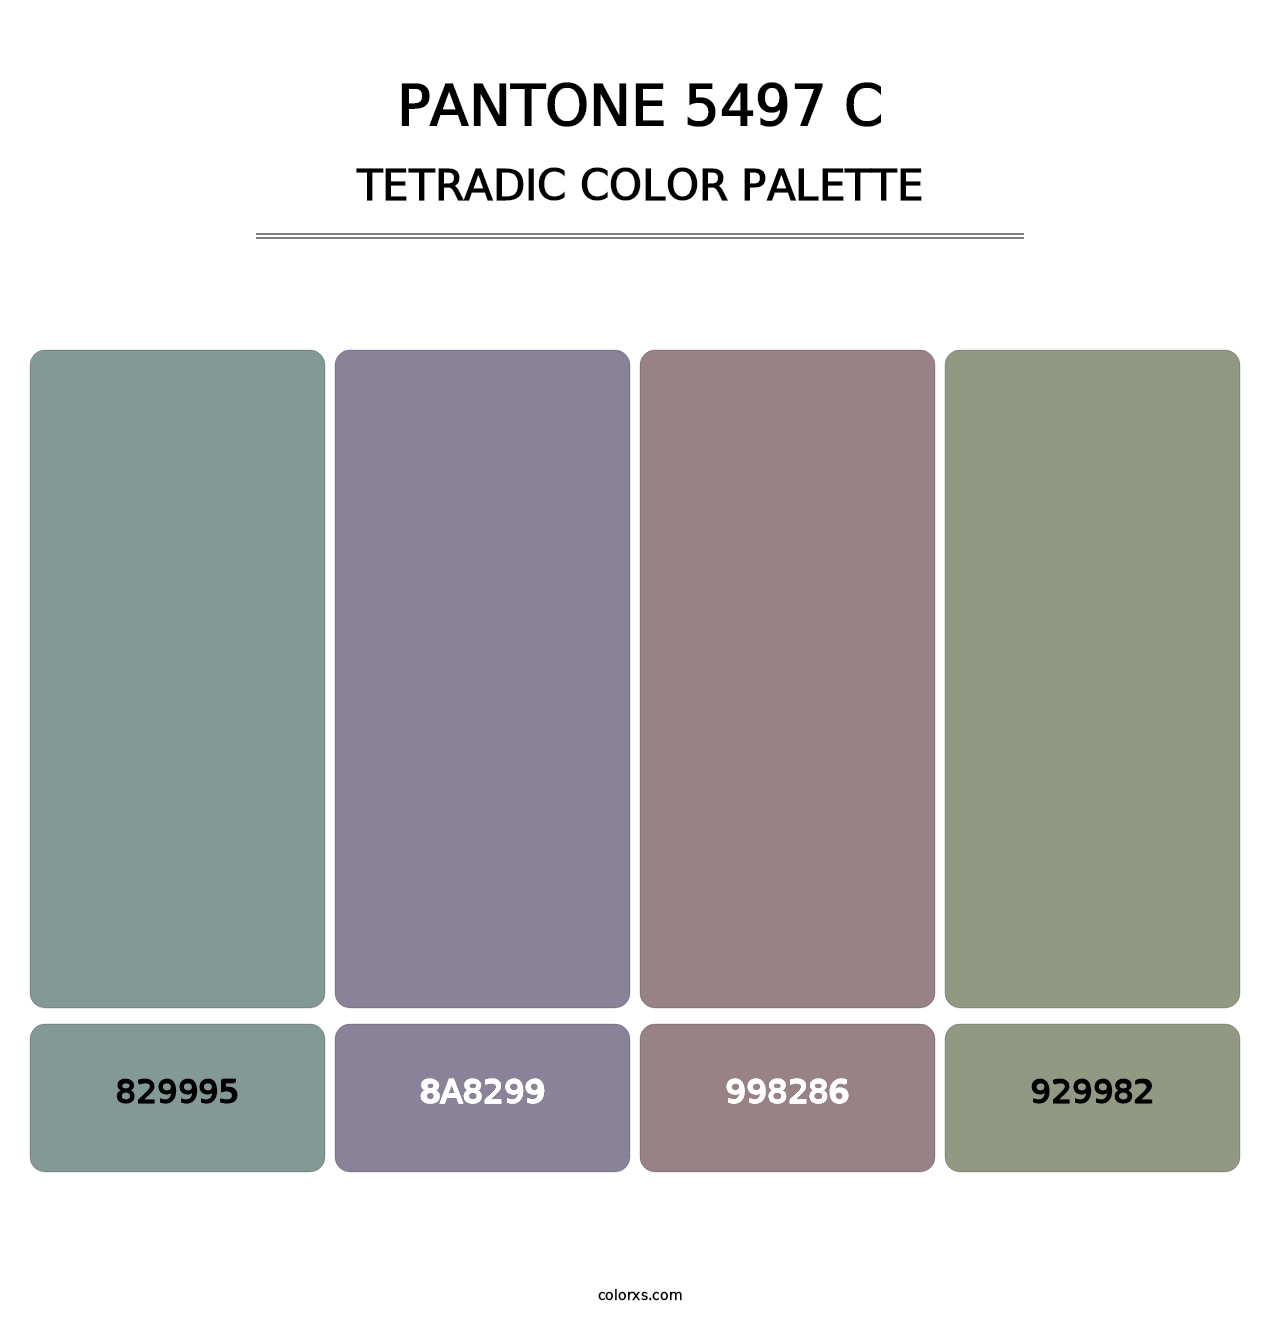 PANTONE 5497 C - Tetradic Color Palette